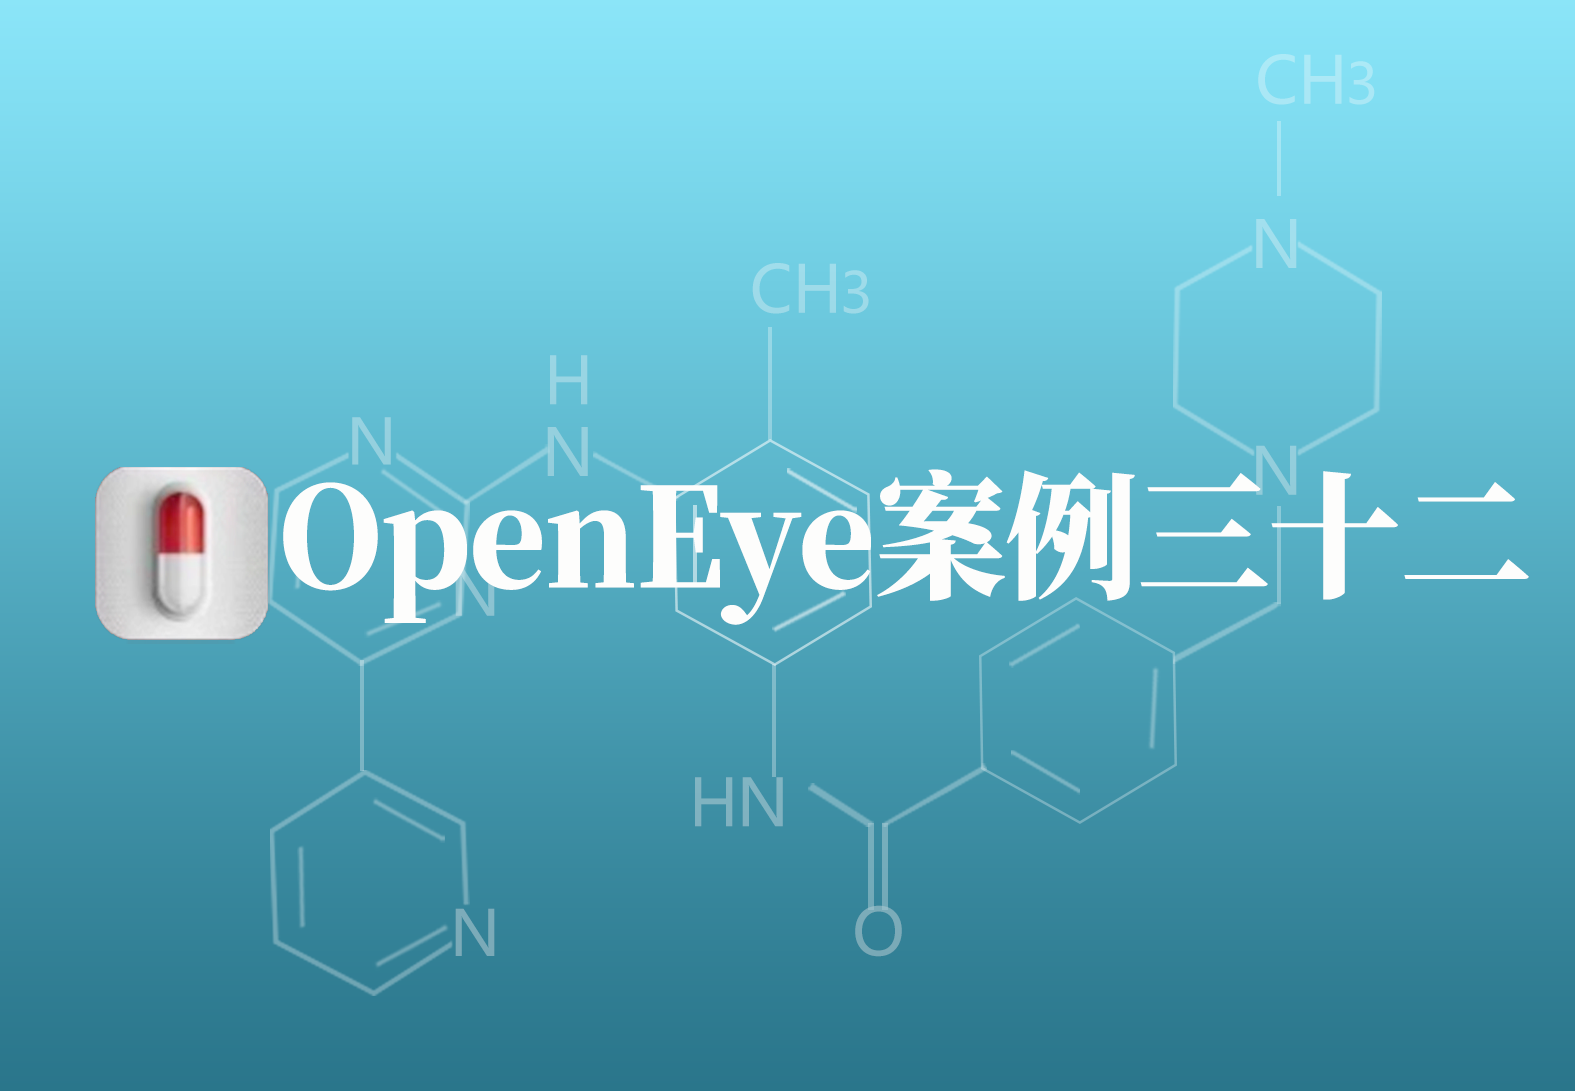 OpenEye应用案例三十二：IKK-2抑制剂的发现研究